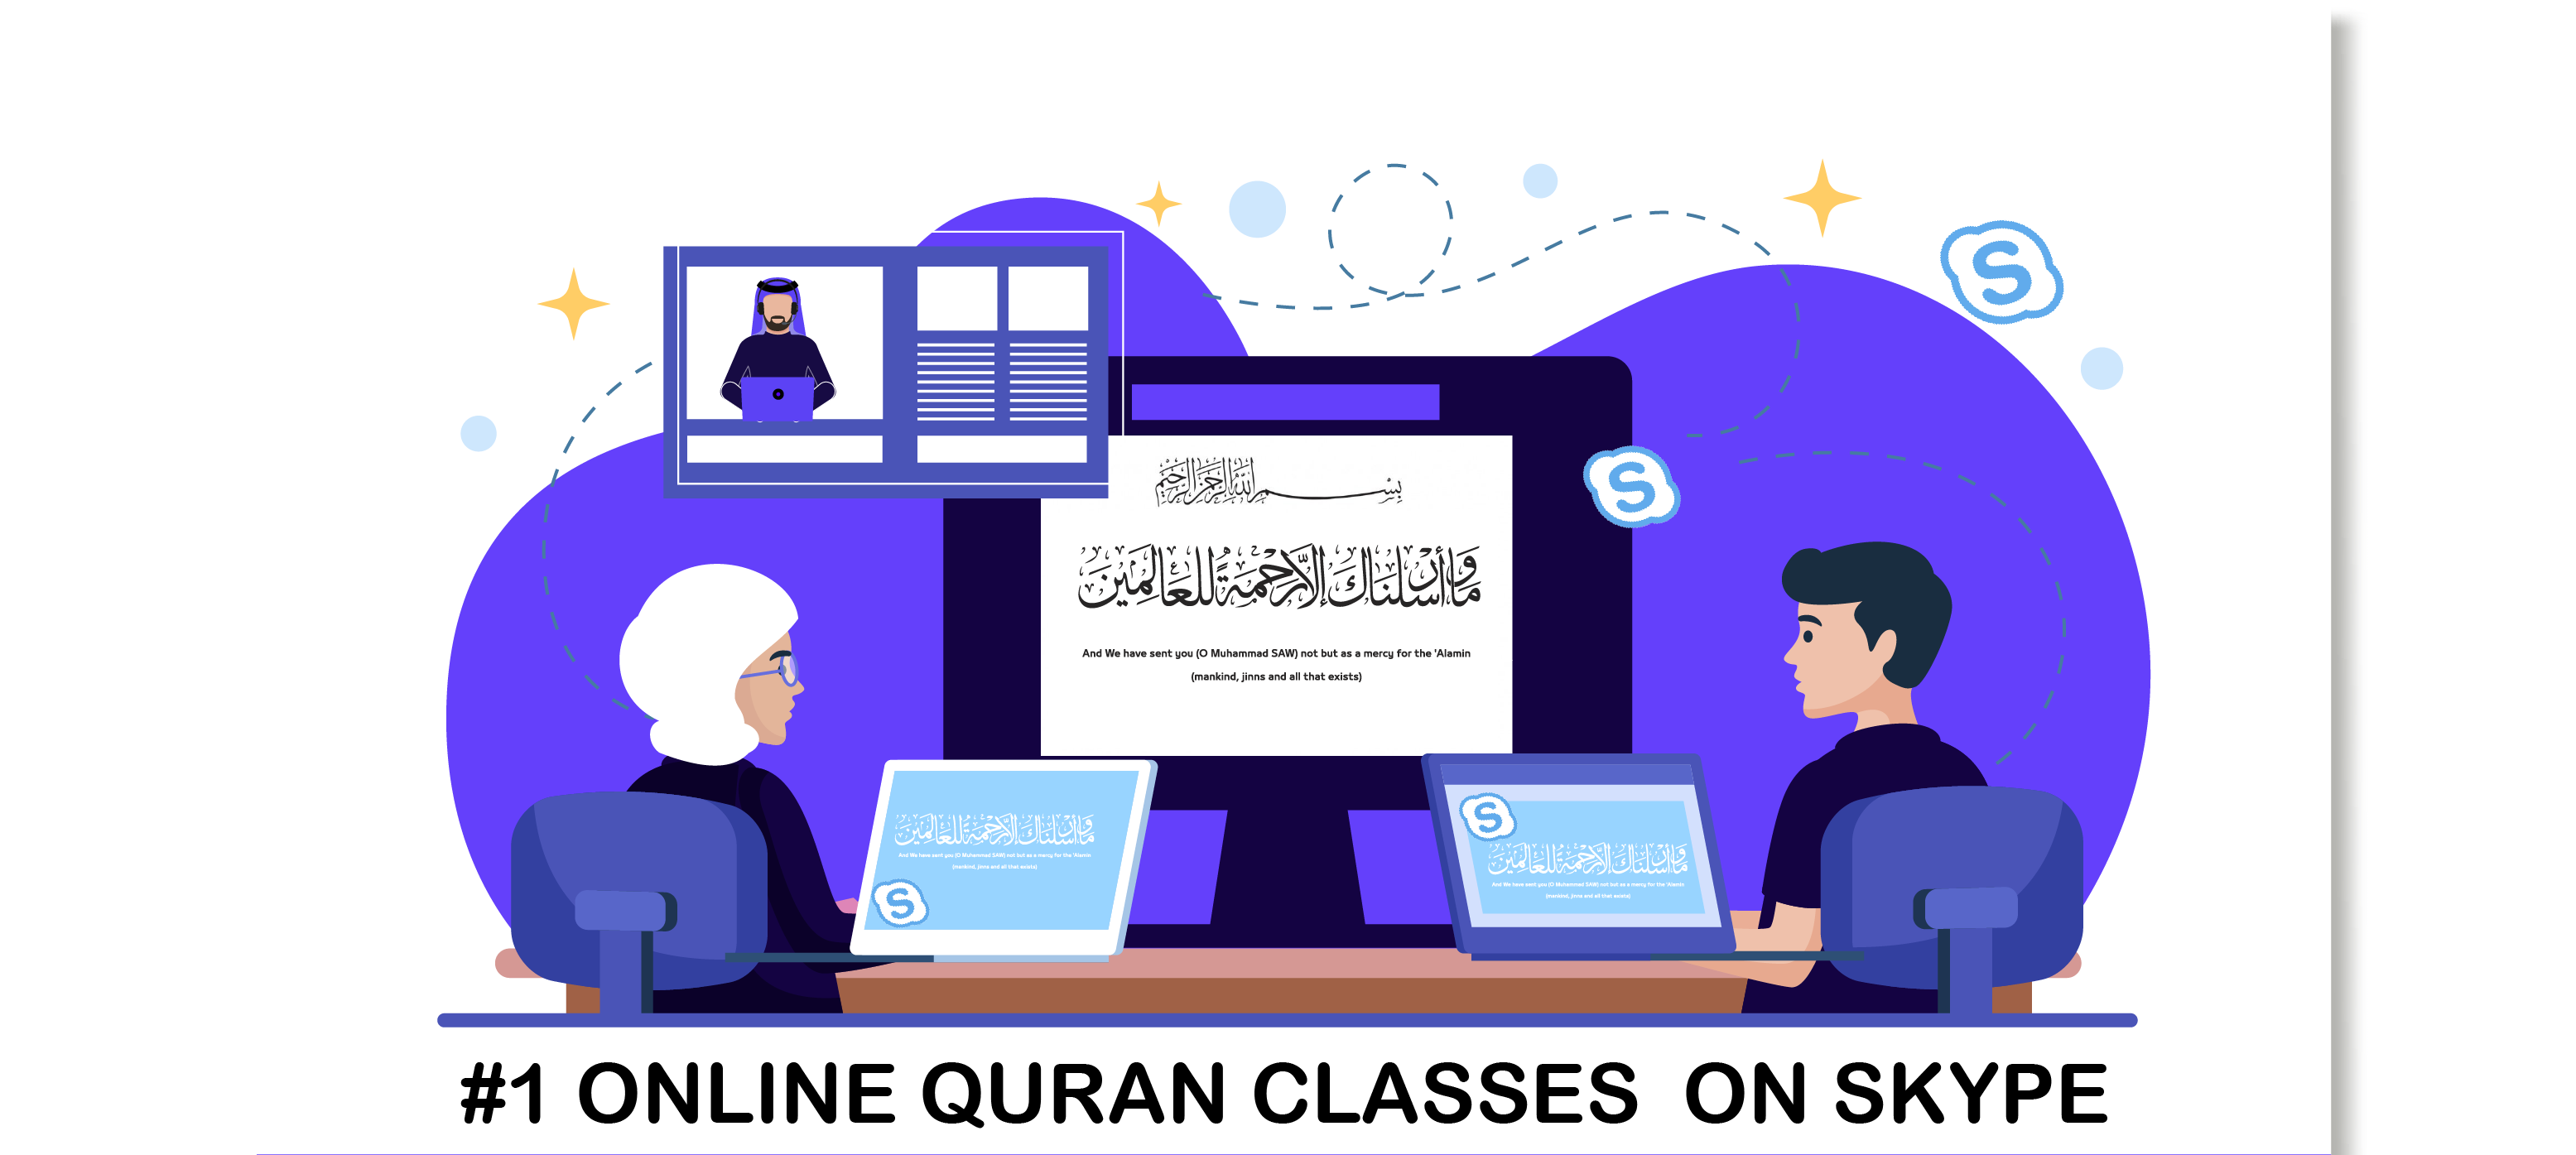 Quran classes online skype